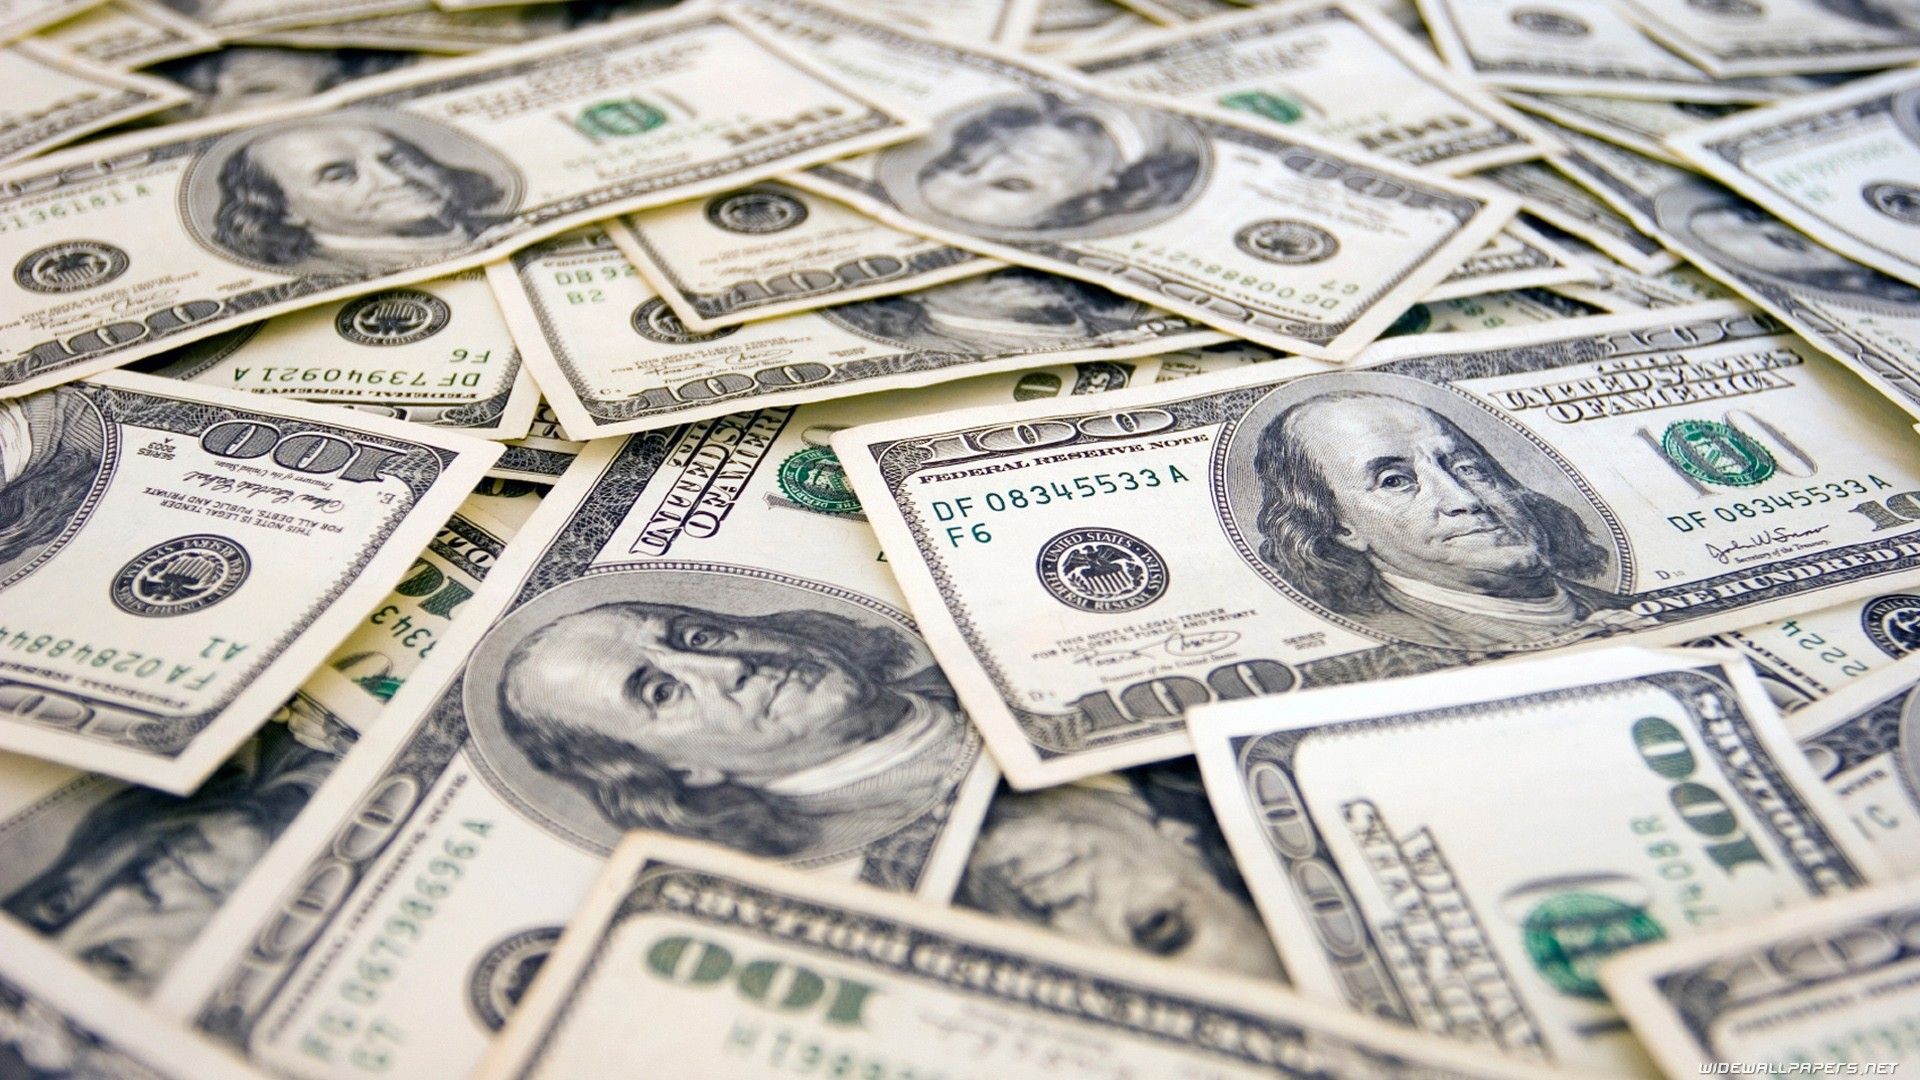 A pile of 100 dollar bills - Money